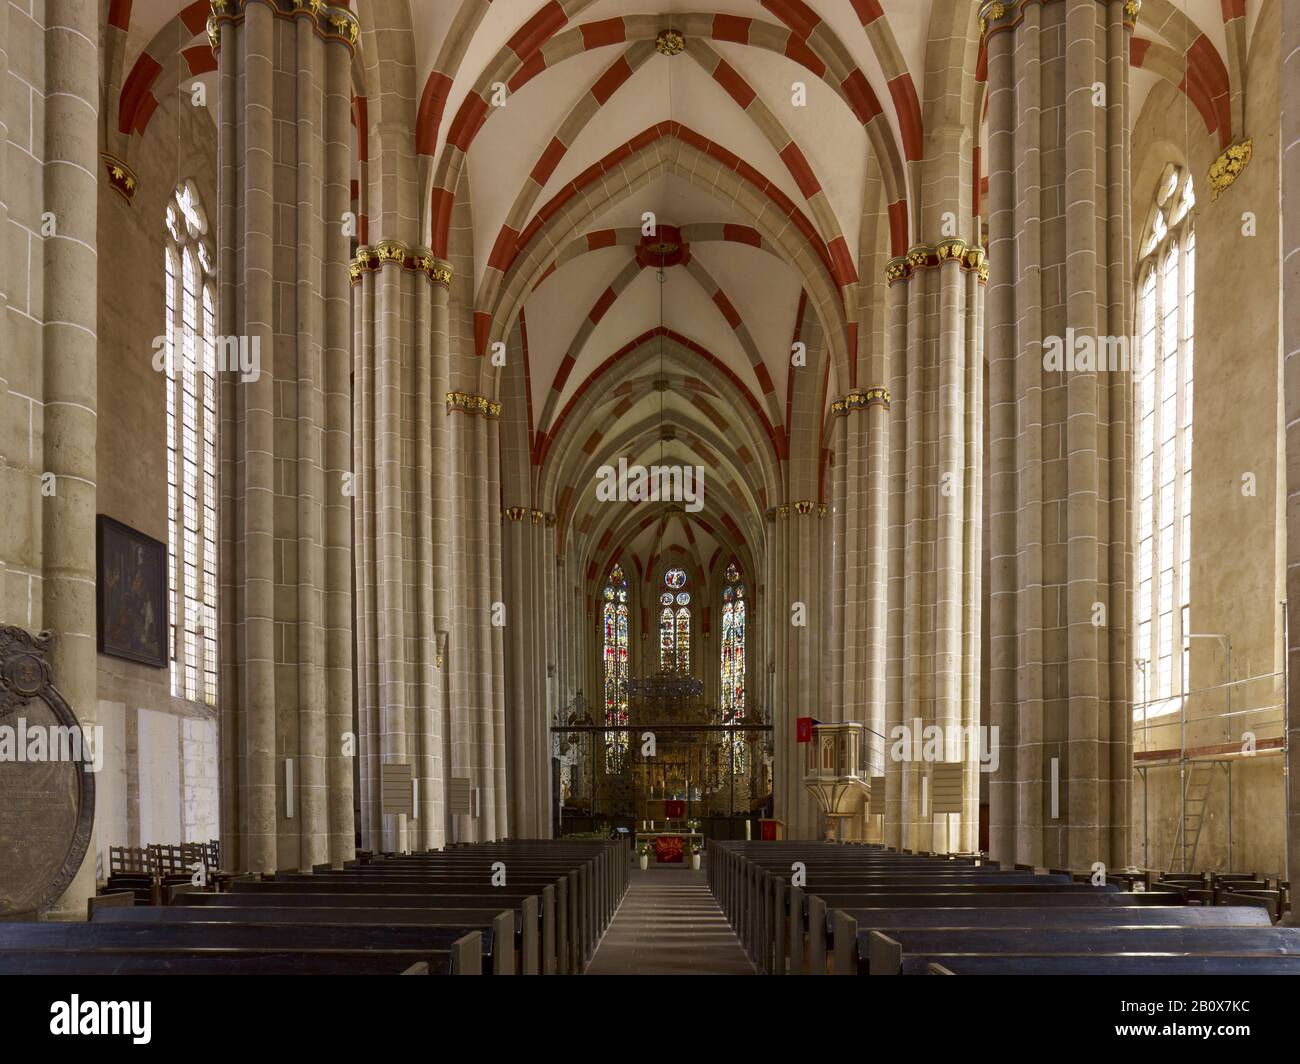 Interior view of Divi Blasii church in Mühlhausen, Thuringia, Germany, Stock Photo